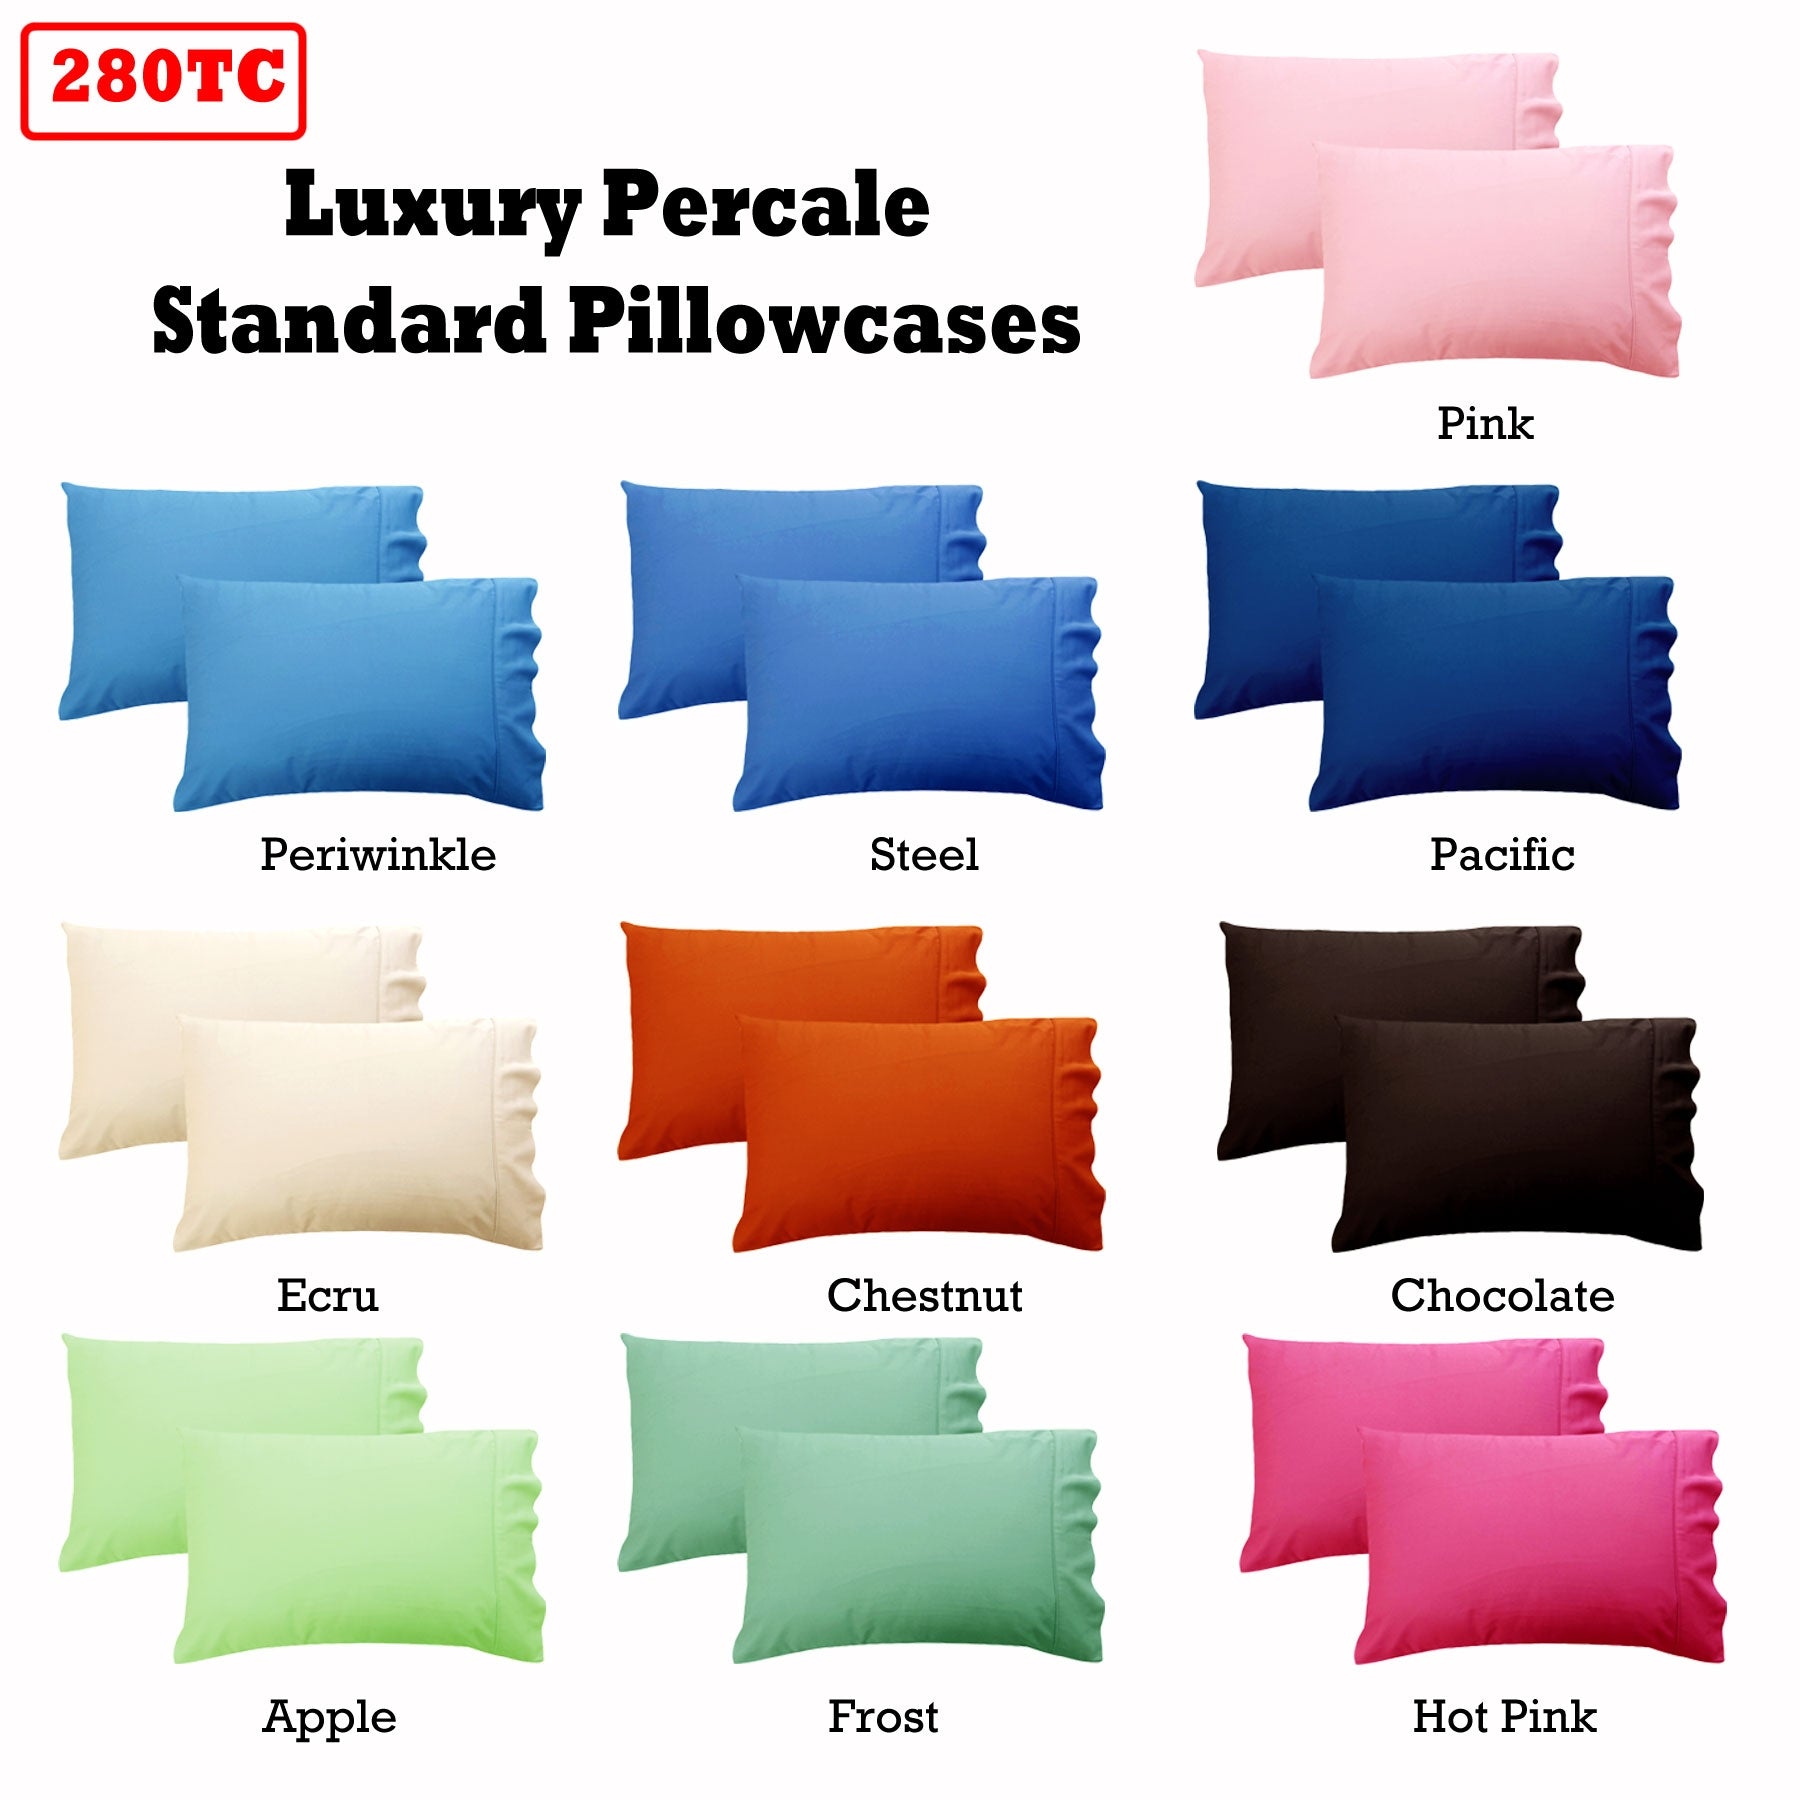 280TC Luxury Percale Standard Pillowcases Ecru